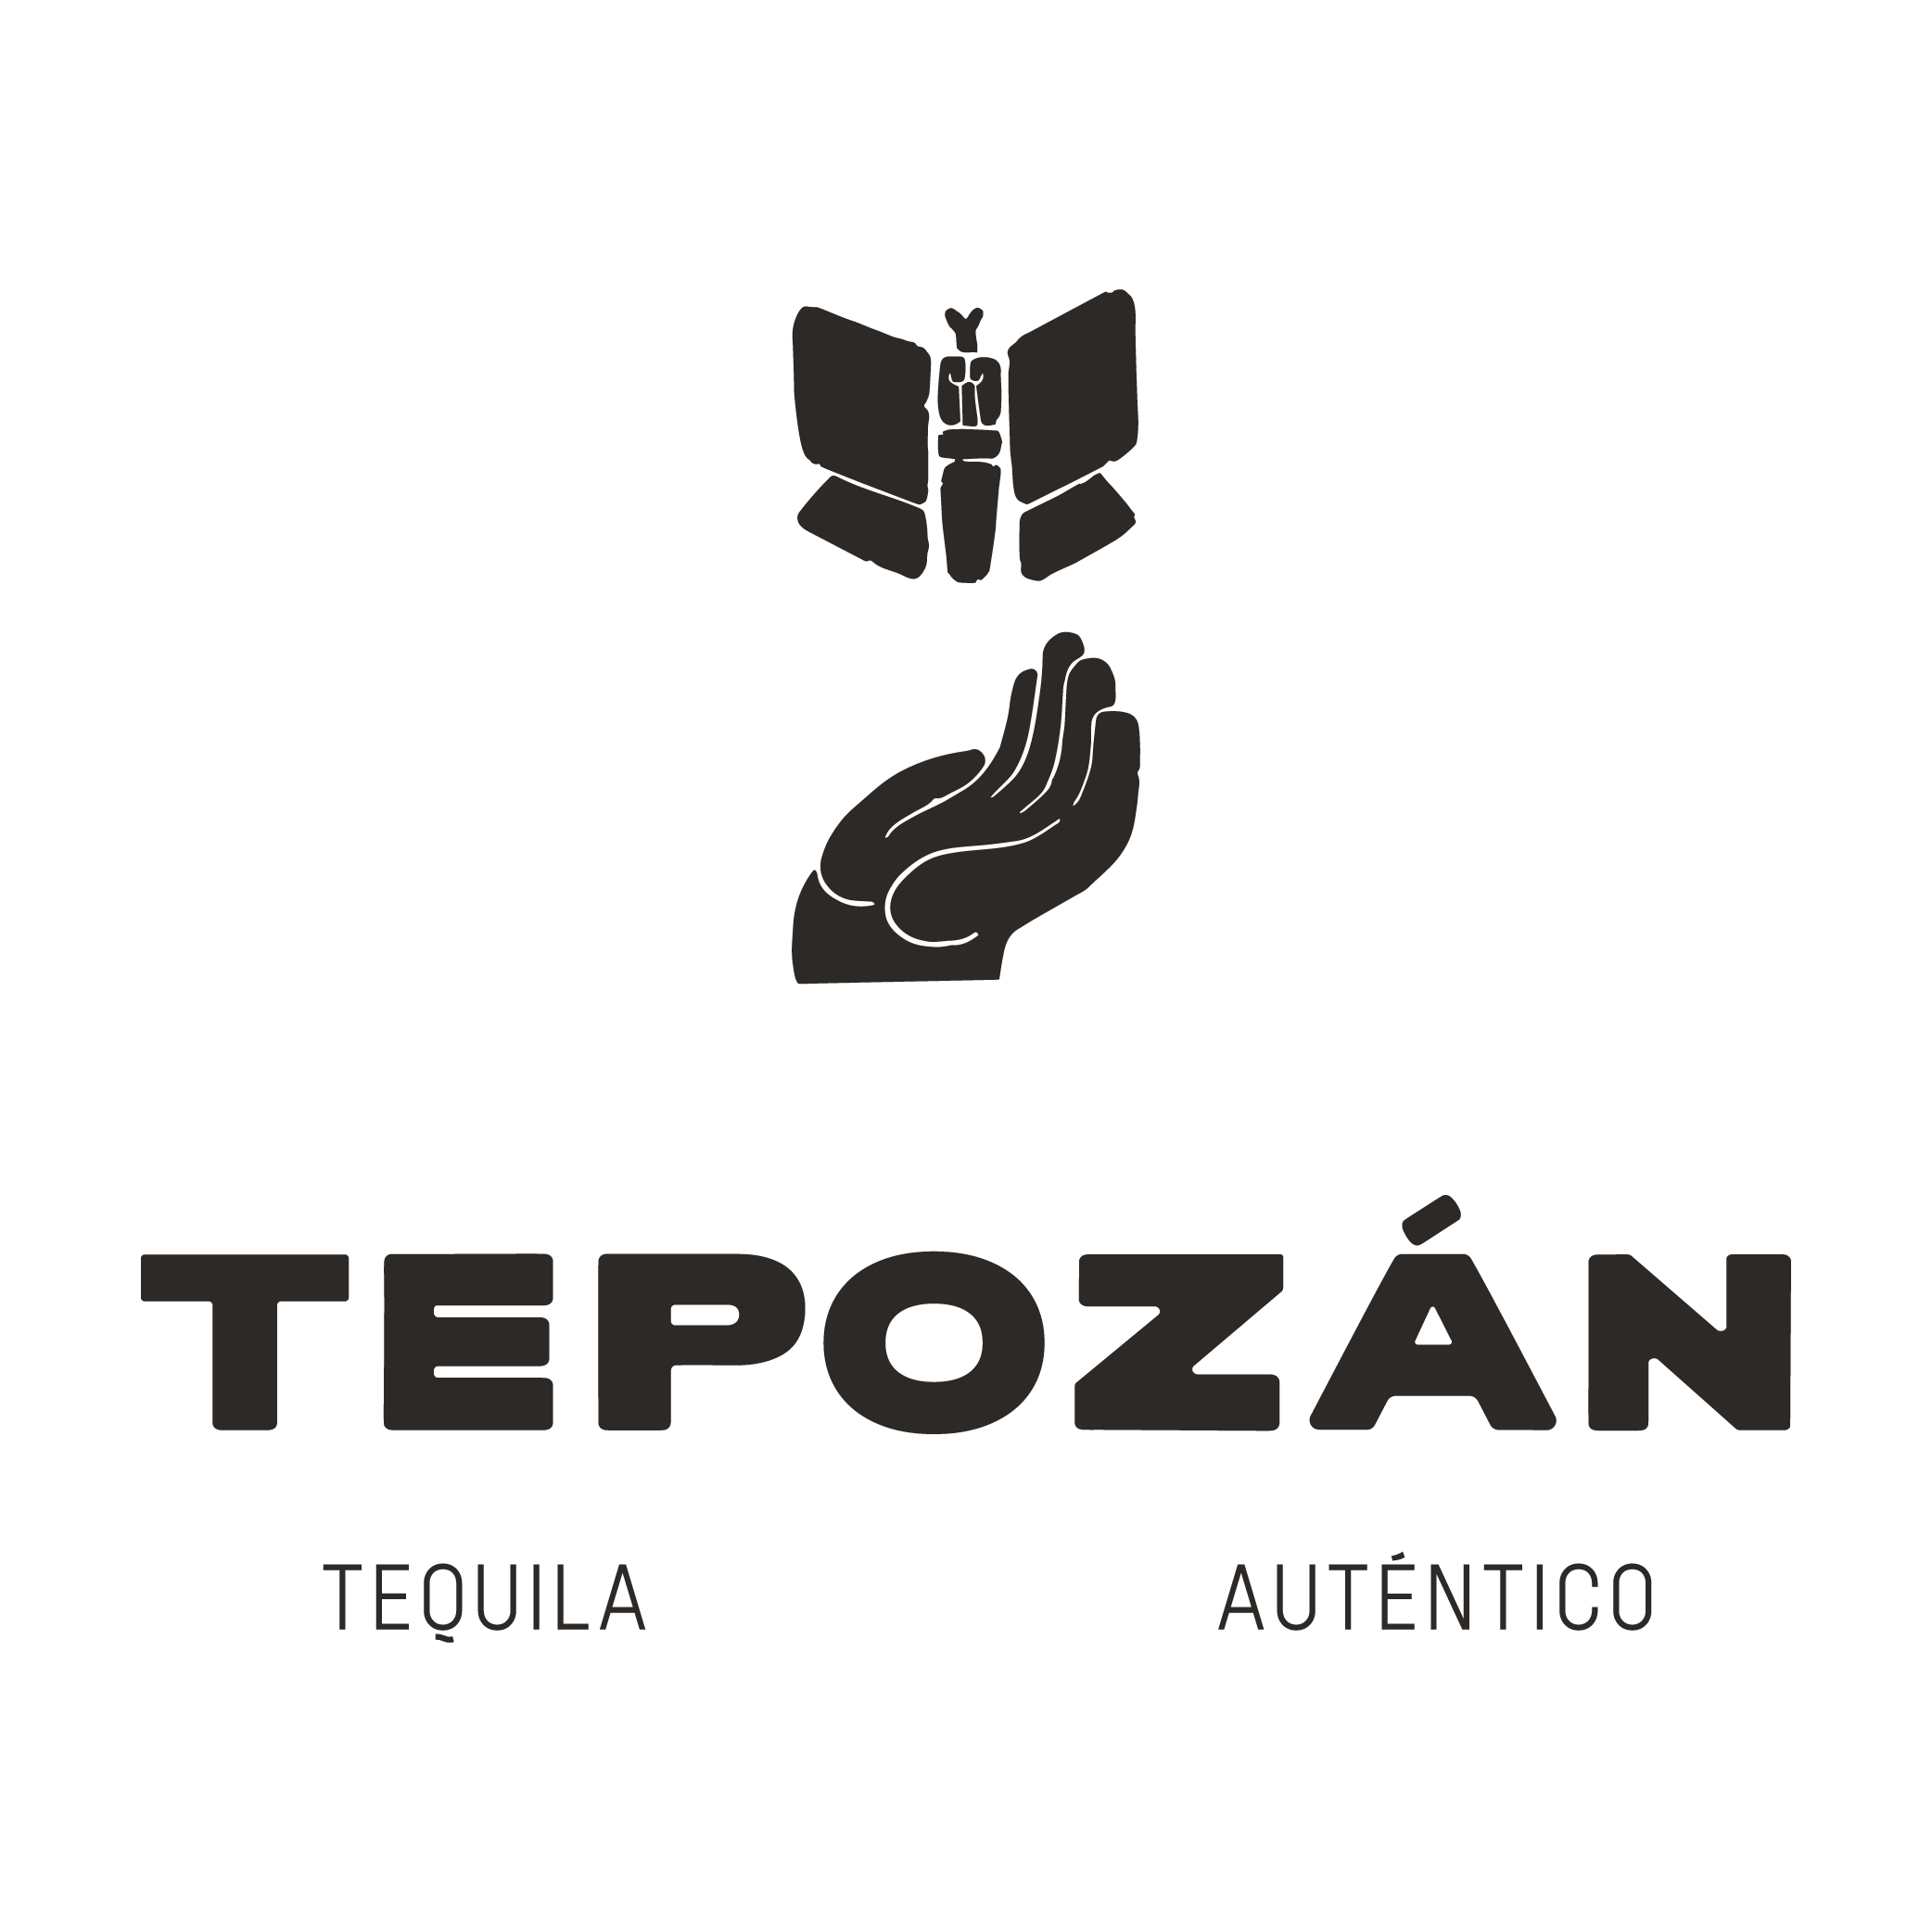 Tepozan-logo-01.png